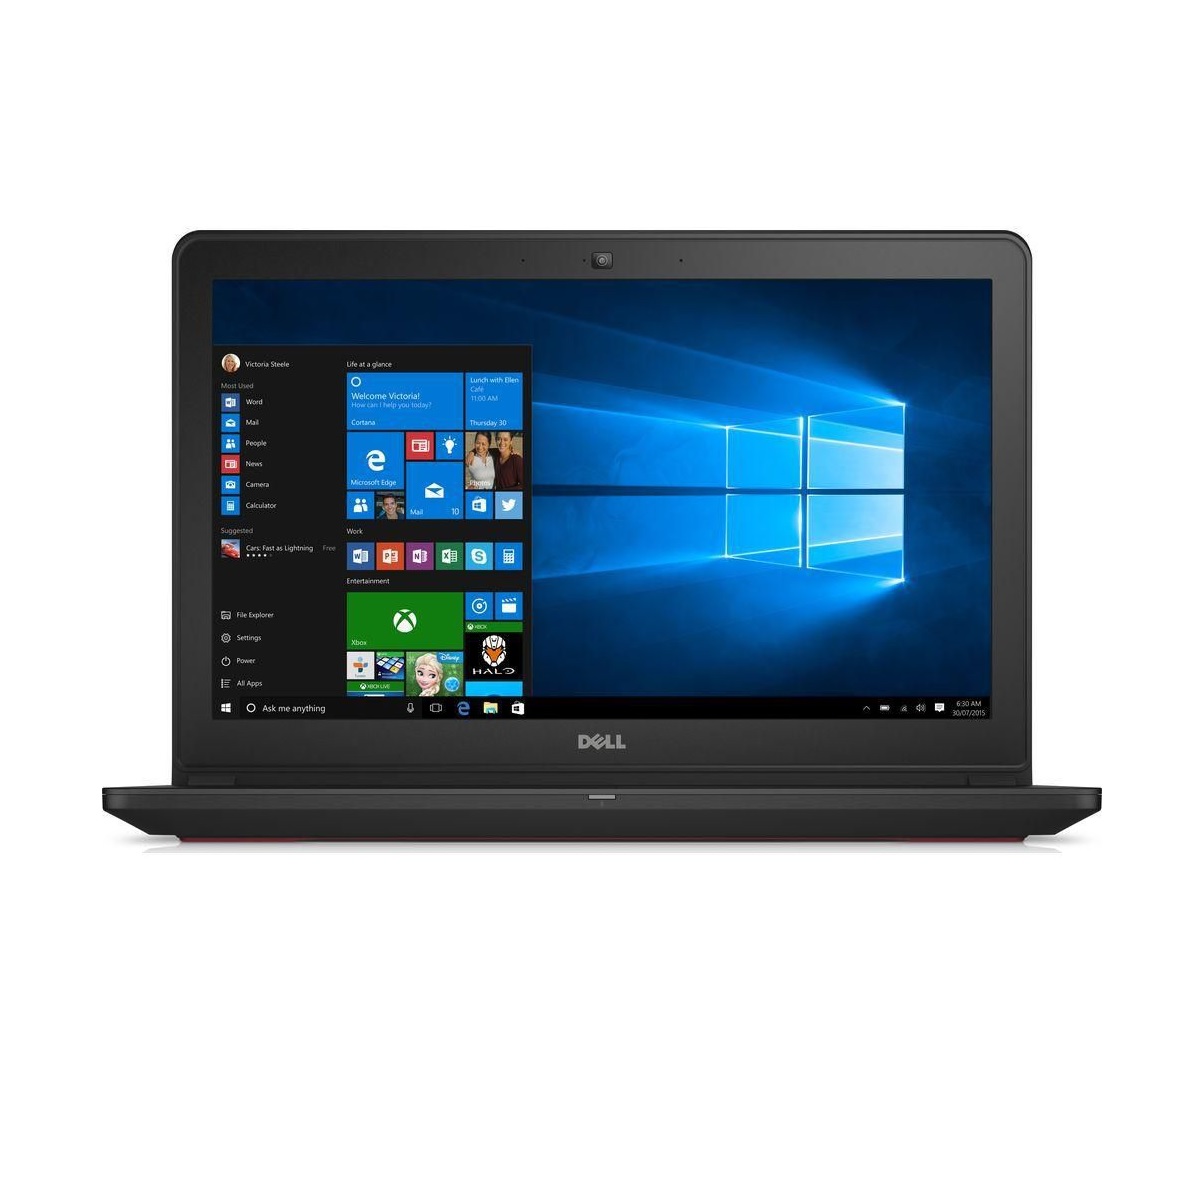 DELL Inspiron 5577 Laptop 2.5GHz i5-7300HQ 15.6 inch Black